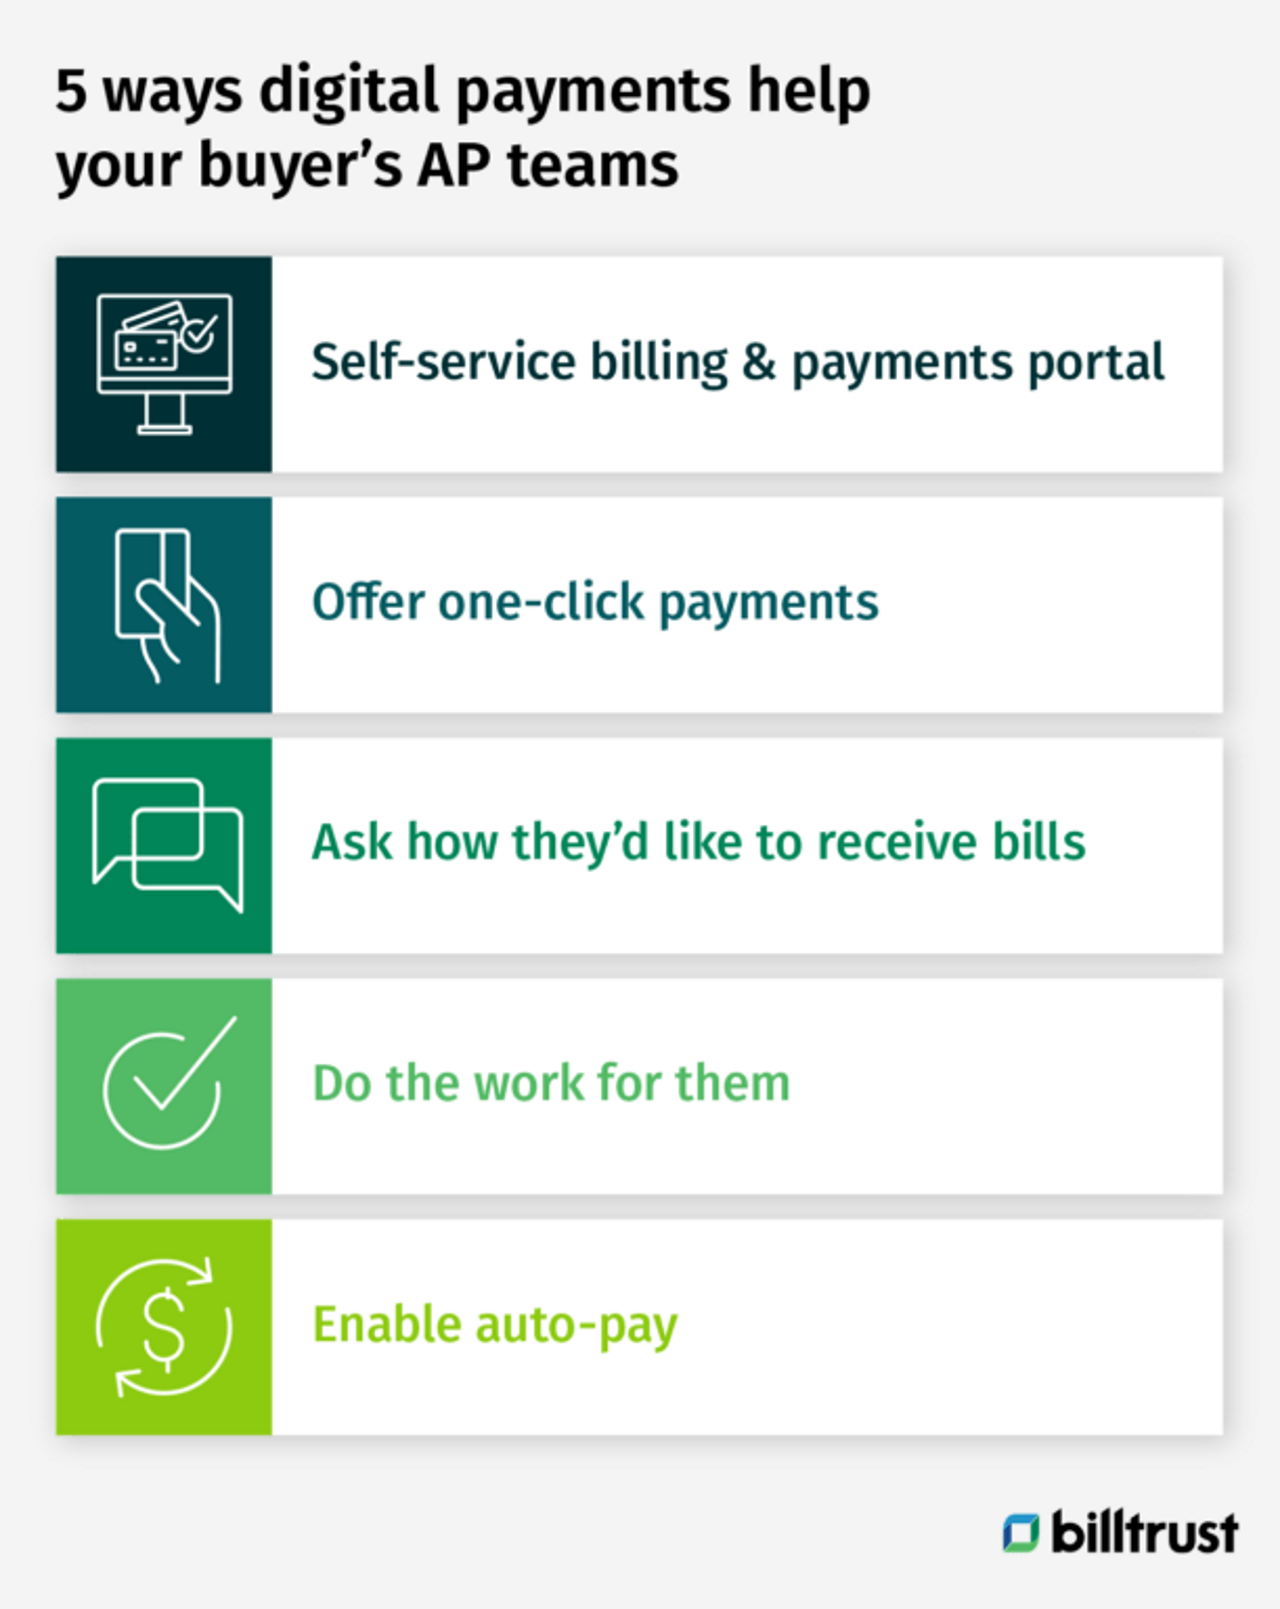 5 ways digital payments help your buyer's AP teams"